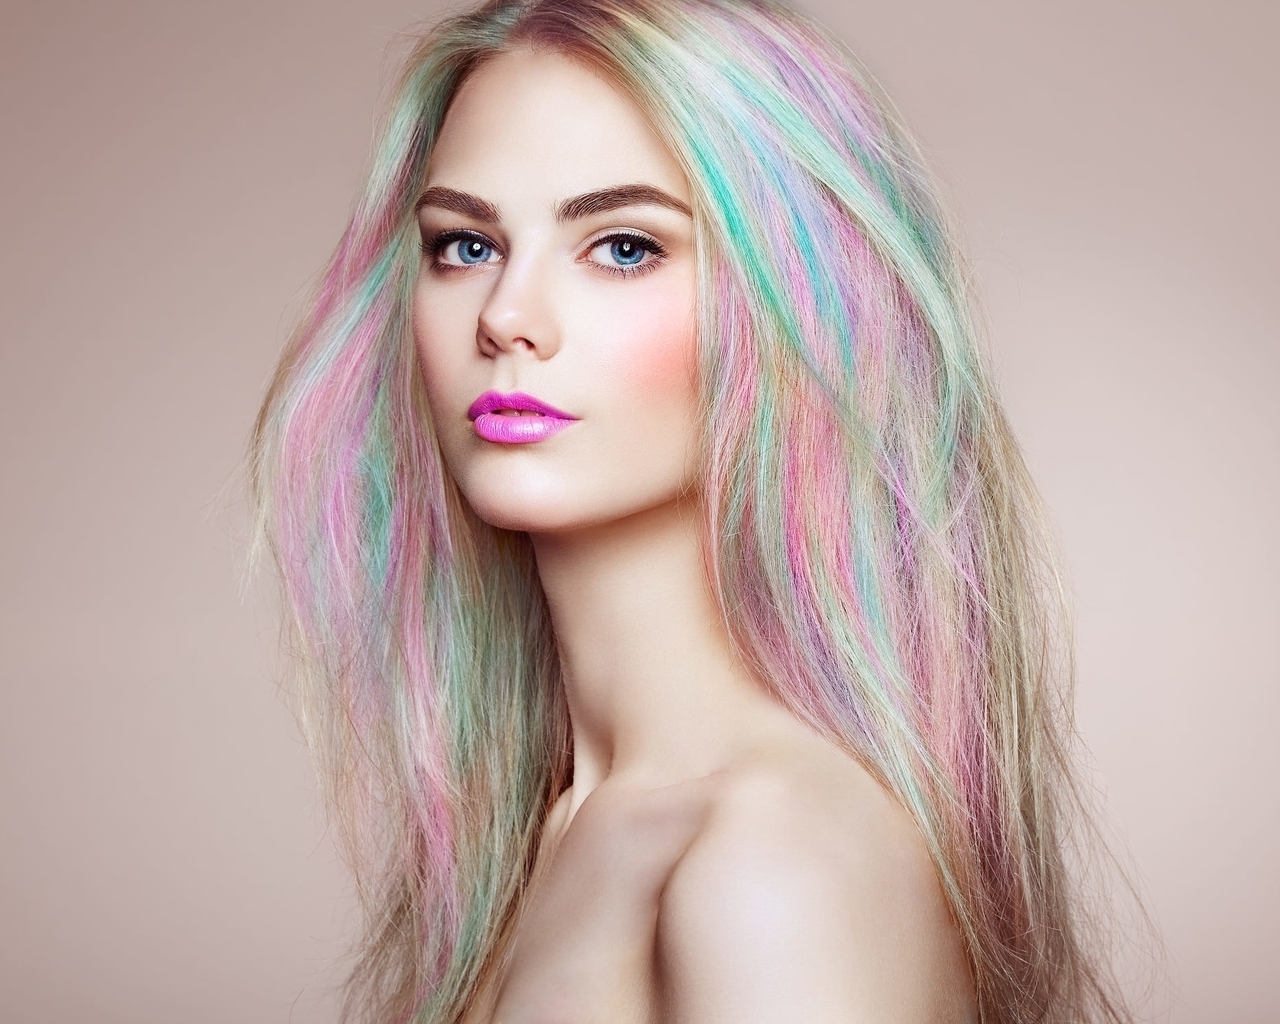 Image: Сolor, rainbow, hair, girl, blonde, face, eyes, makeup